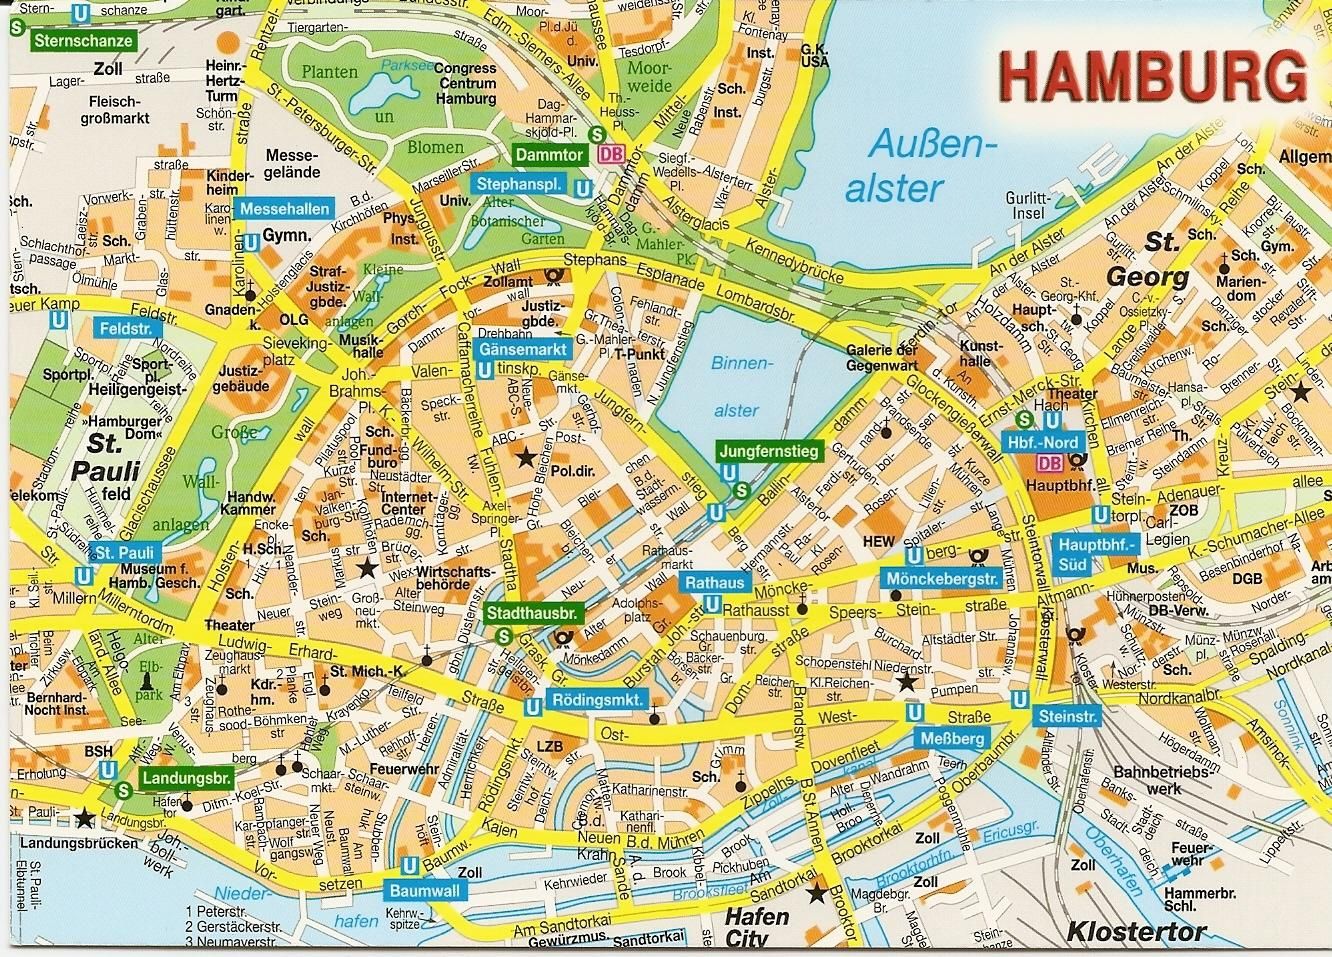 Hamburg downtown - Full size